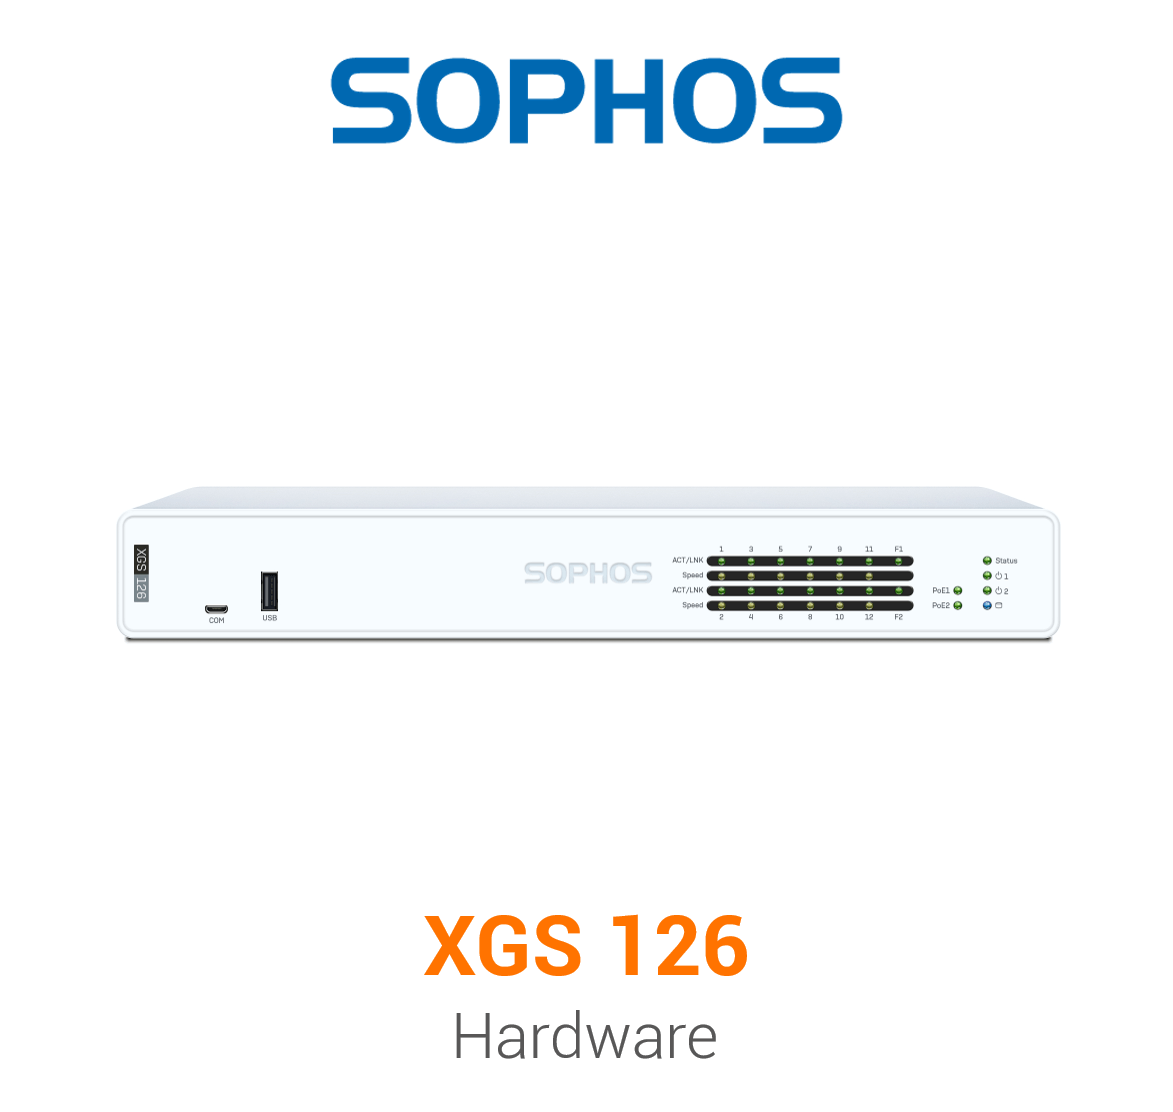 Sophos XGS 126 Security Appliance